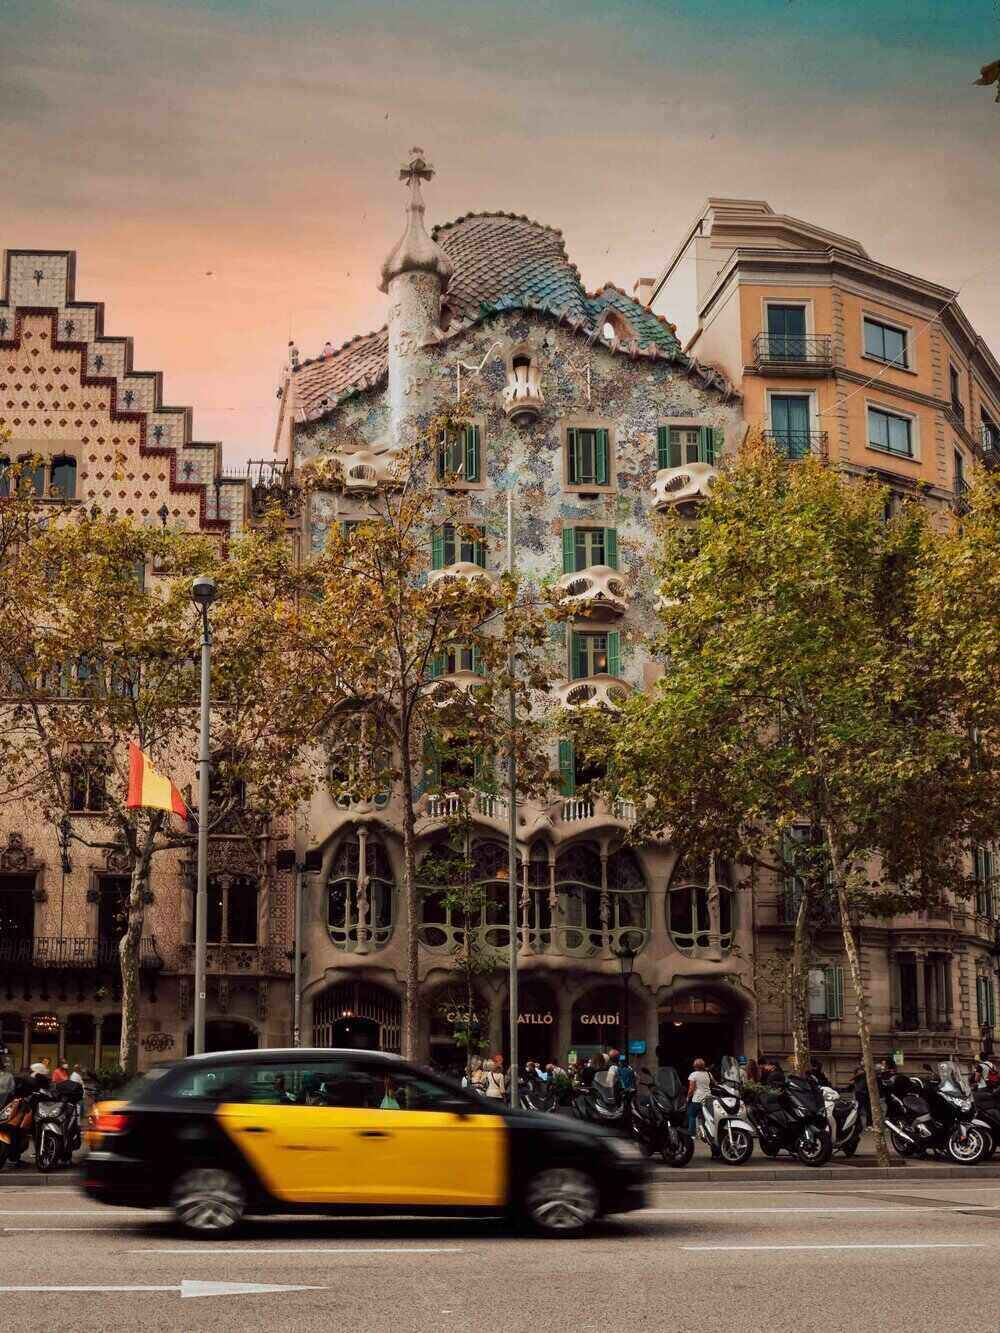 Casa Battlo Barcelona